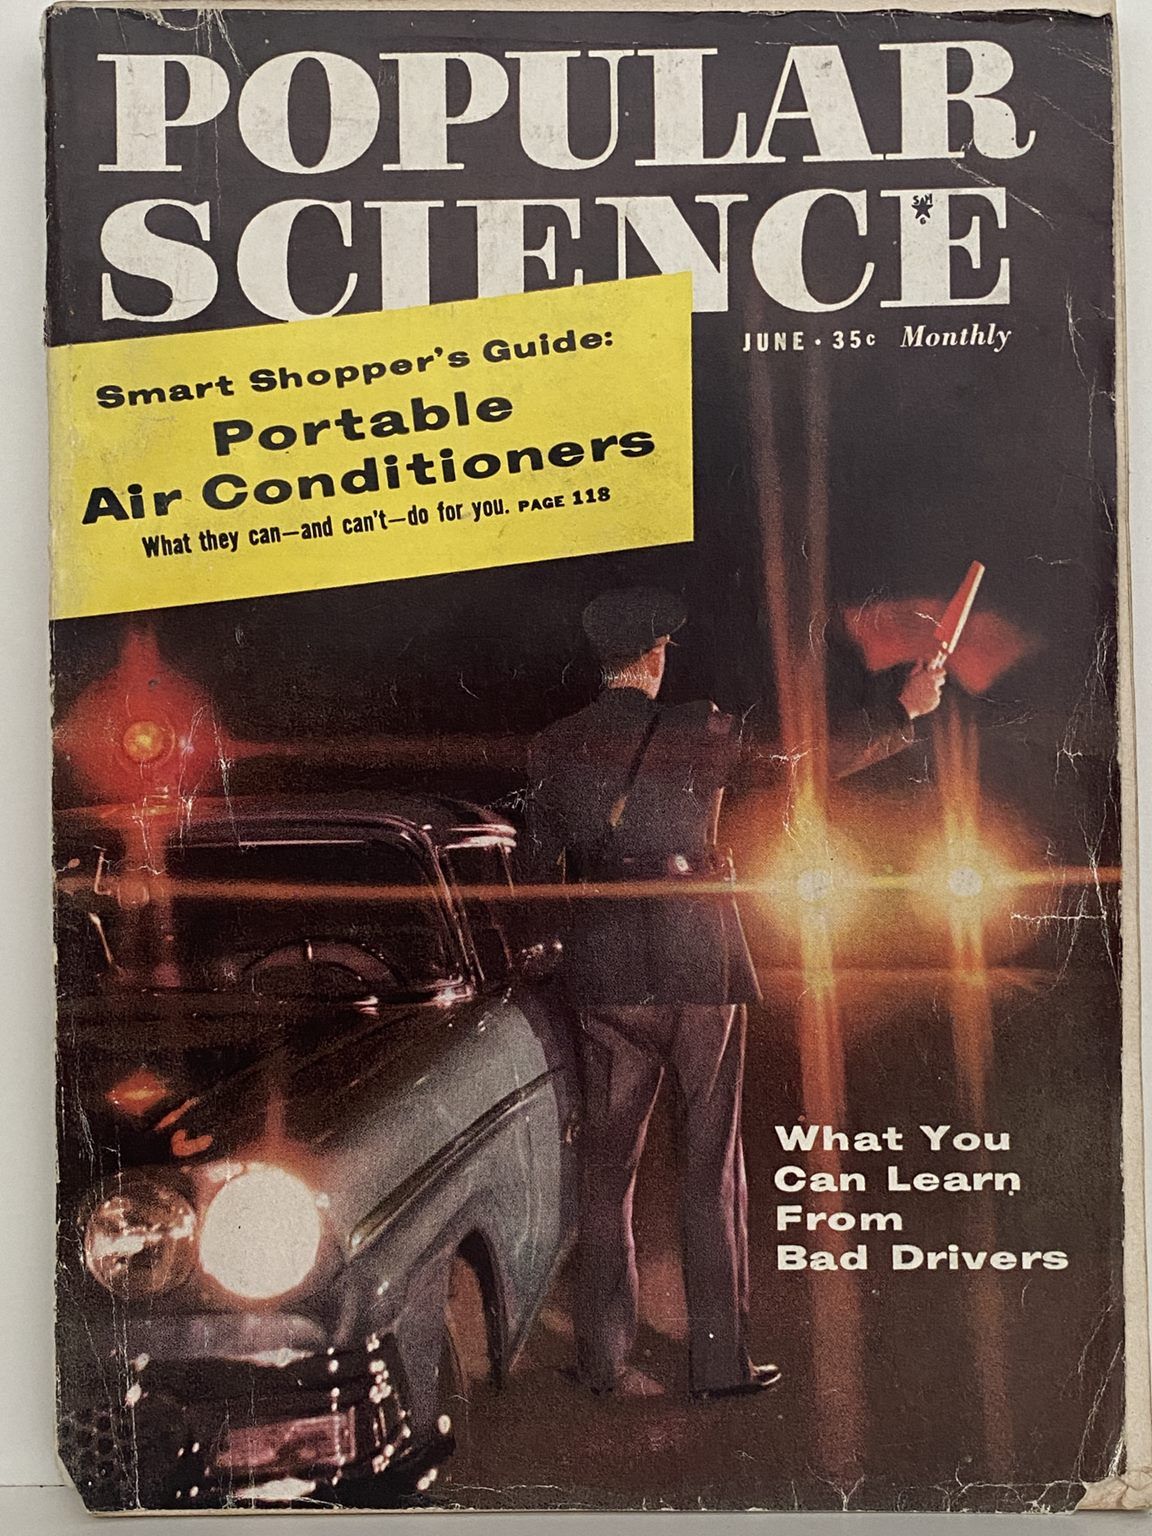 VINTAGE MAGAZINE: Popular Science - June 1958